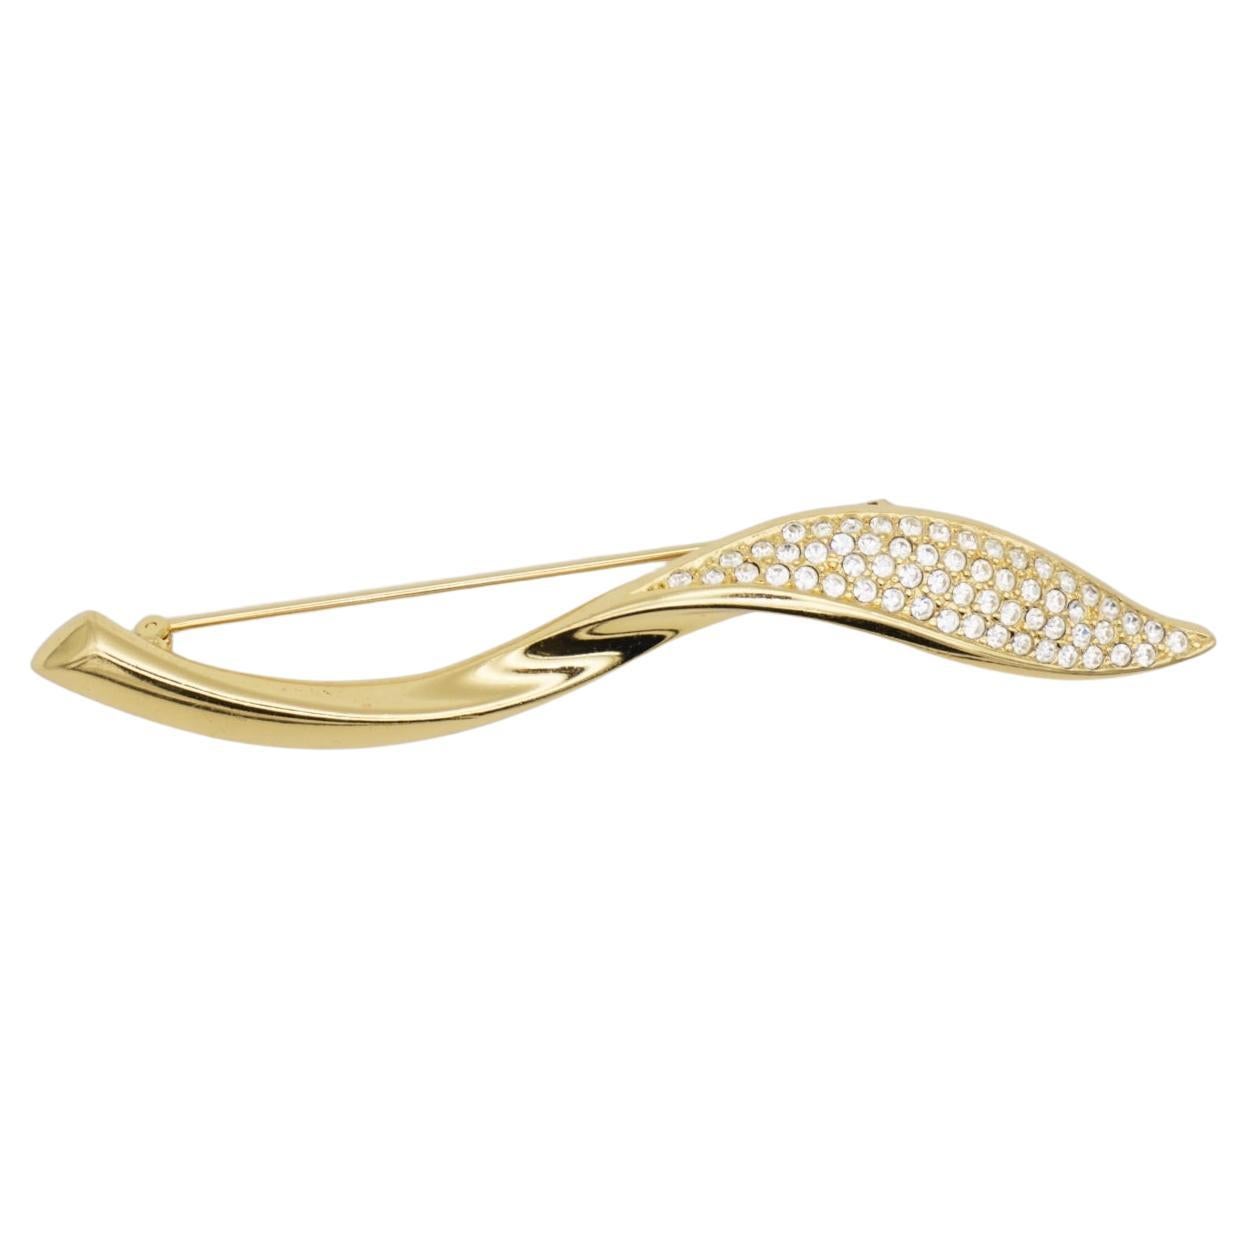 Christian Dior 1970s Vintage Large Long Swirl Leaf Flame Crystals Gold Brooch For Sale